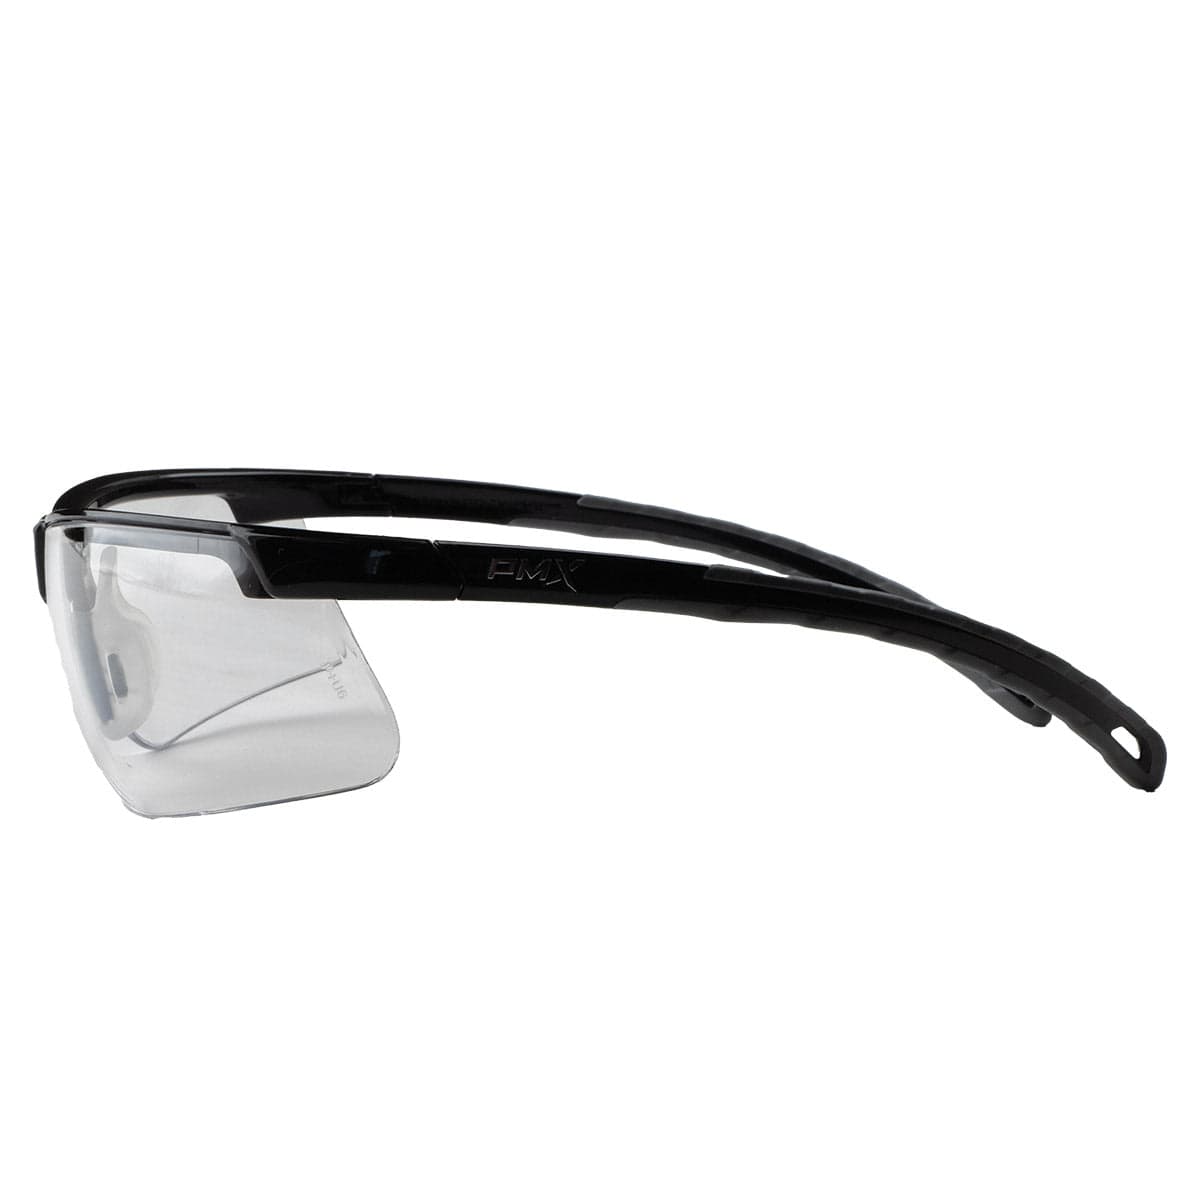 Gemplers Ever-Lite Safety Glasses